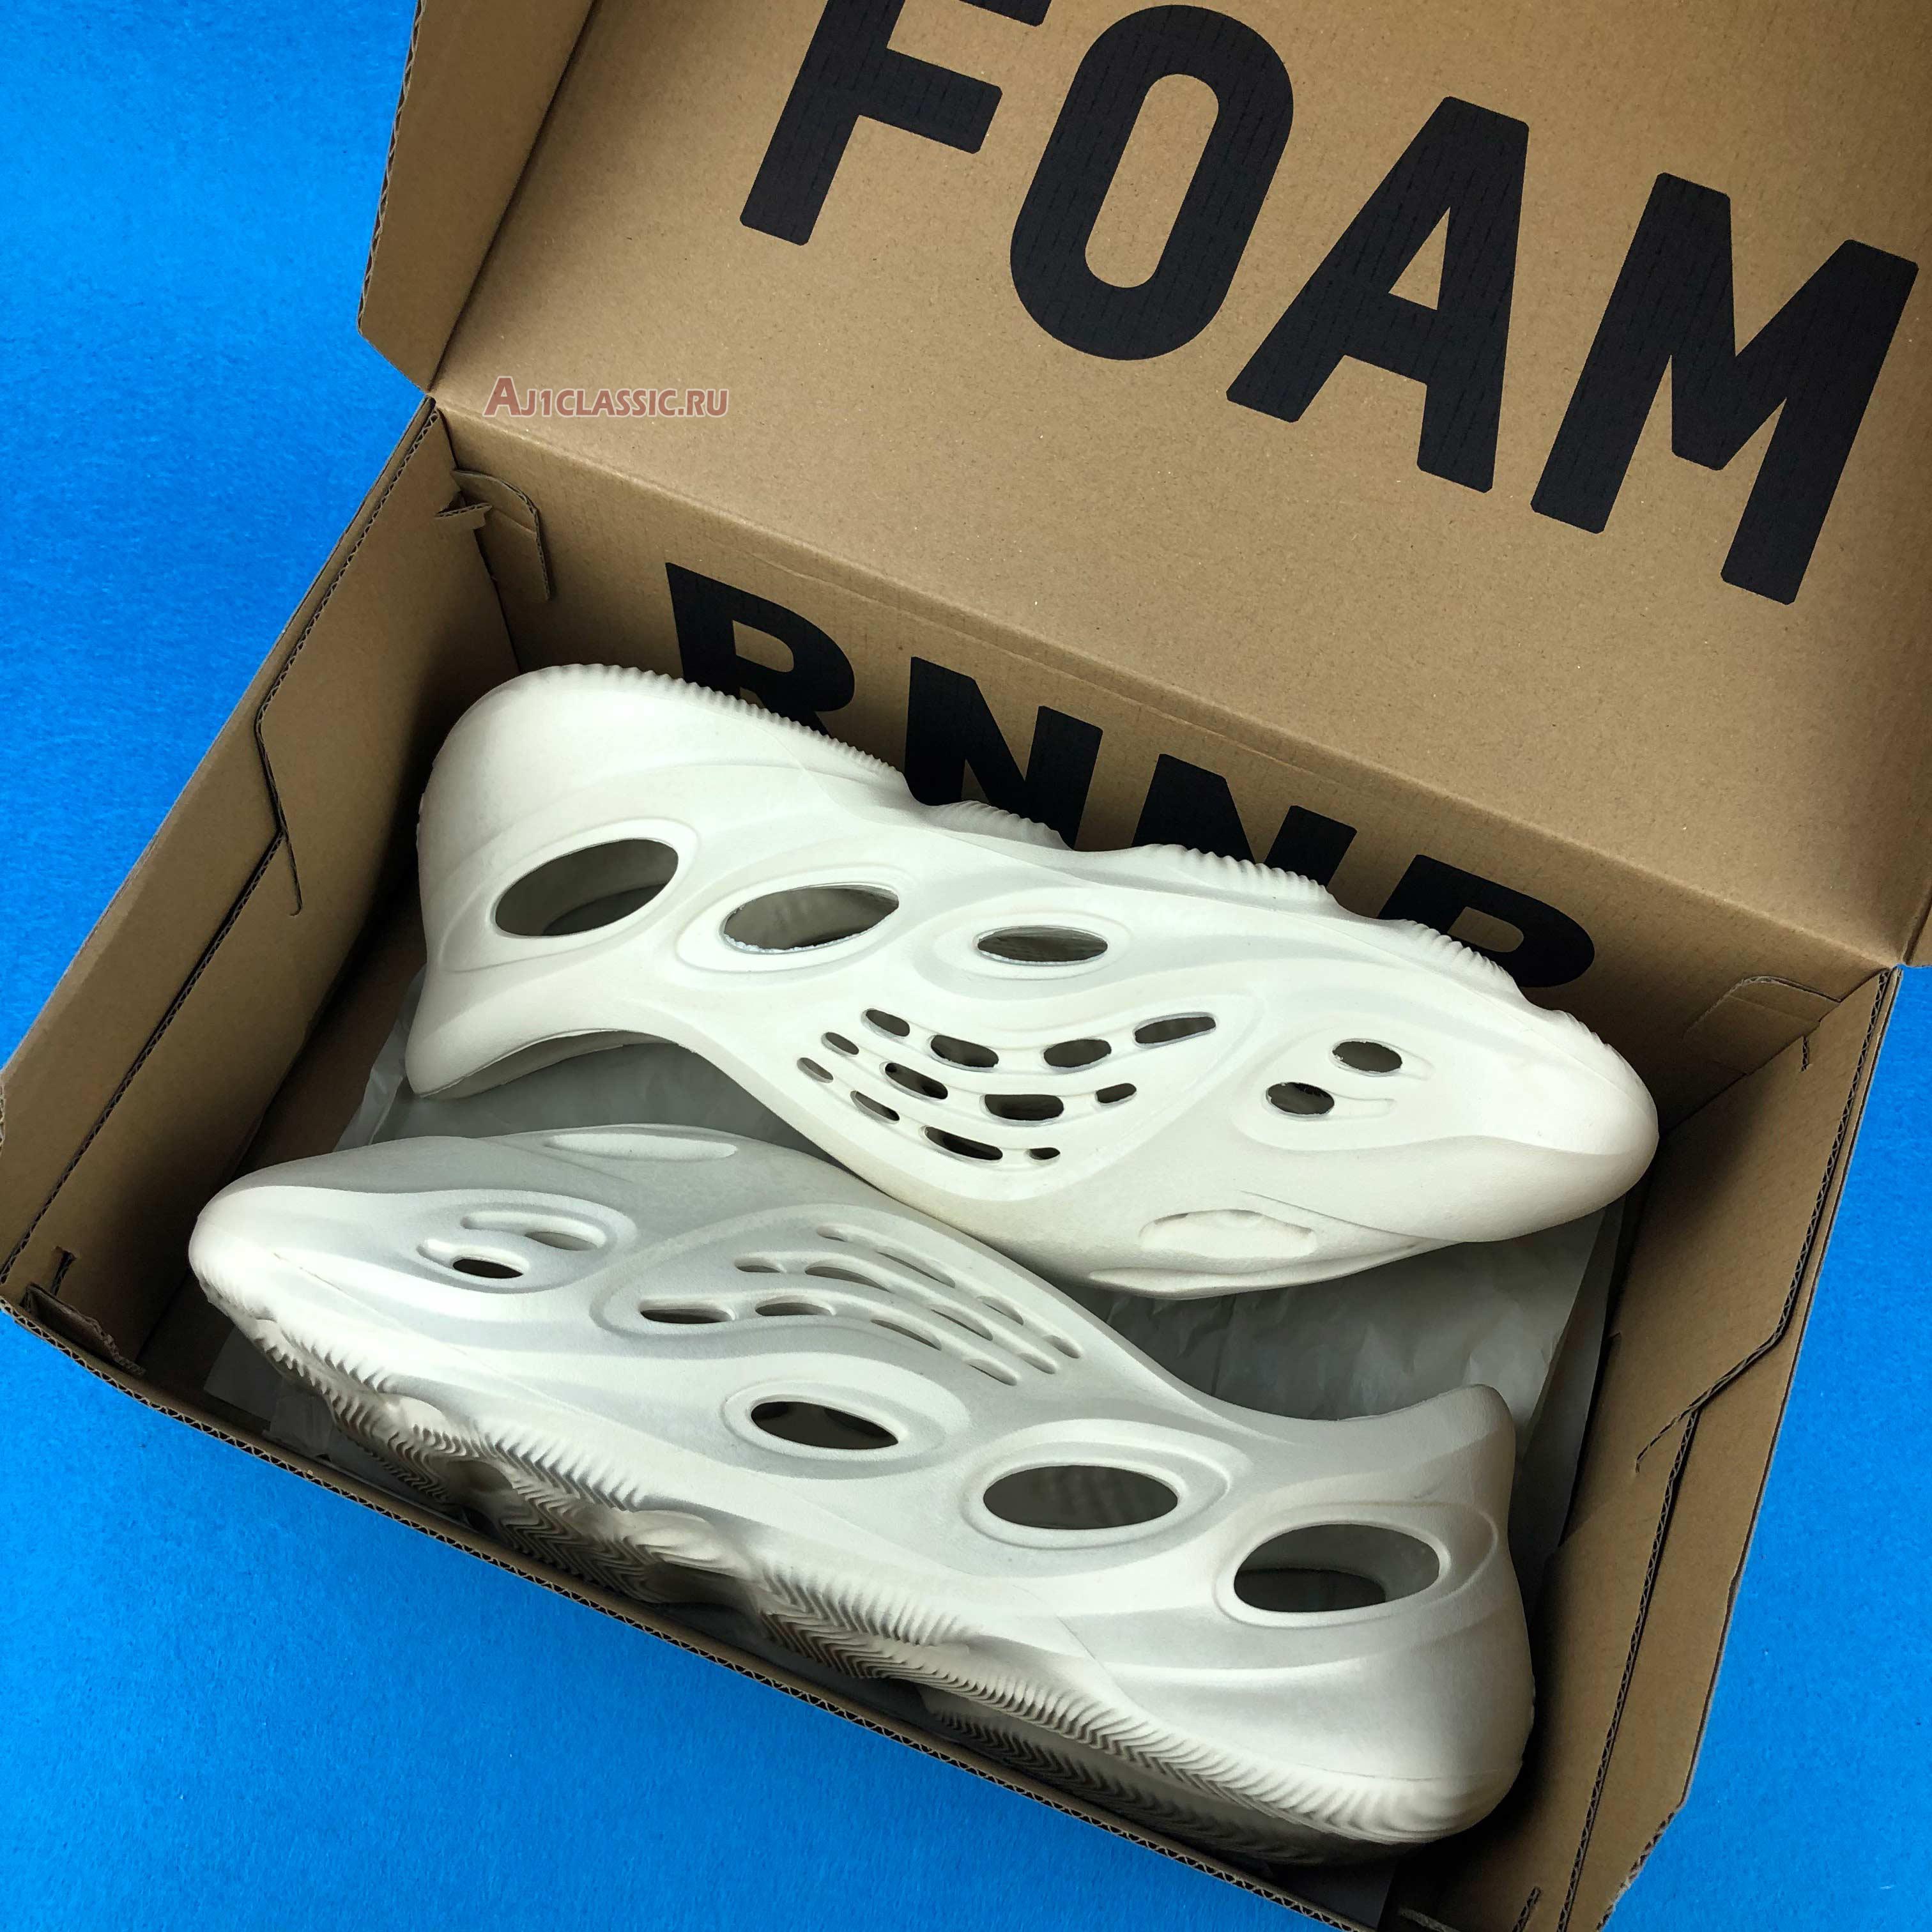 Adidas Yeezy Foam Runner Sand FY4567 Etham/Etham/Etham Sneakers